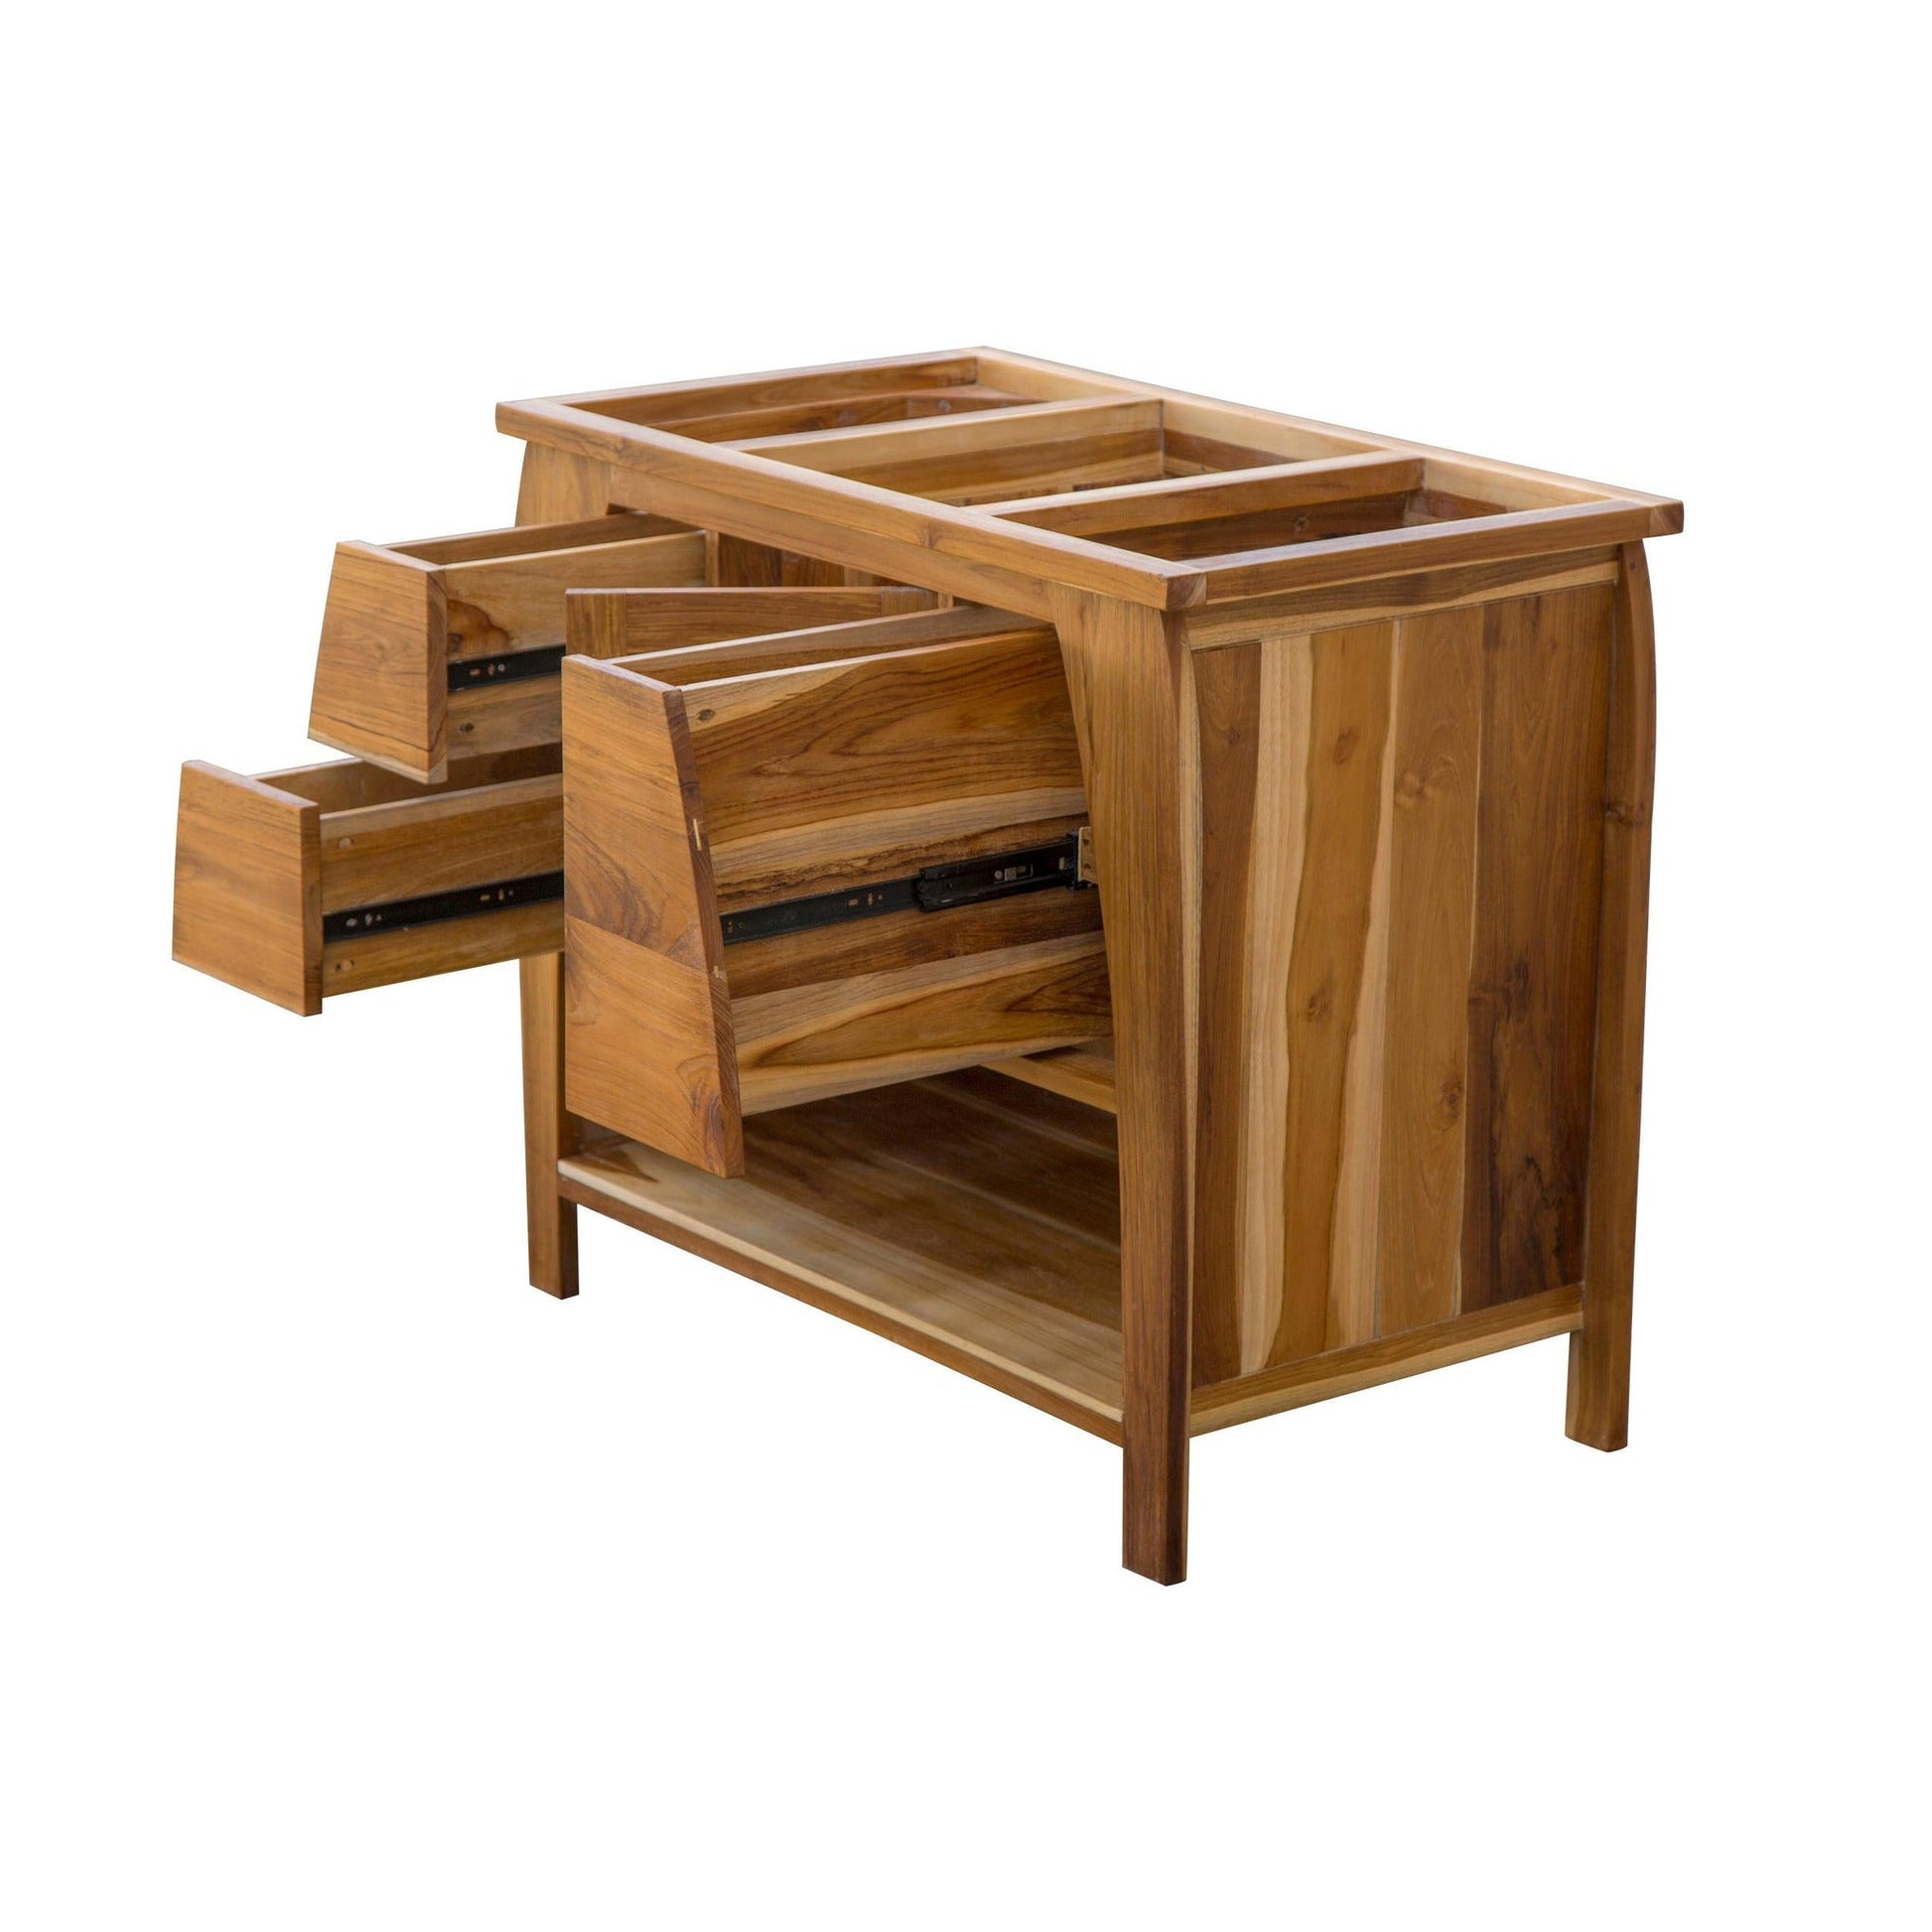 EcoDecors Tranquility 36" EarthyTeak Solid Teak Wood Fully Assembled Freestanding Vanity Base